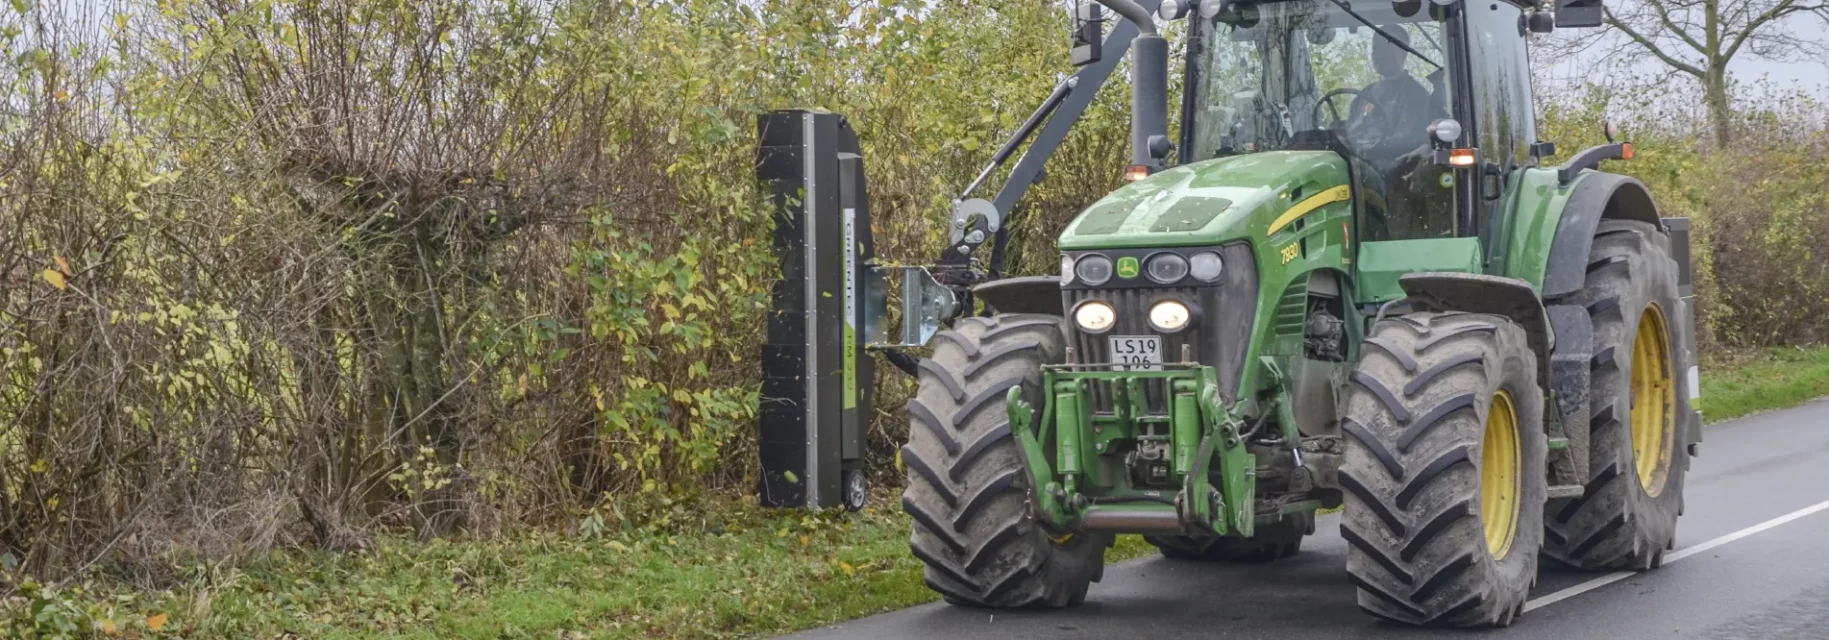 Hedge mulcher mounted on John Deere 7930 tractor